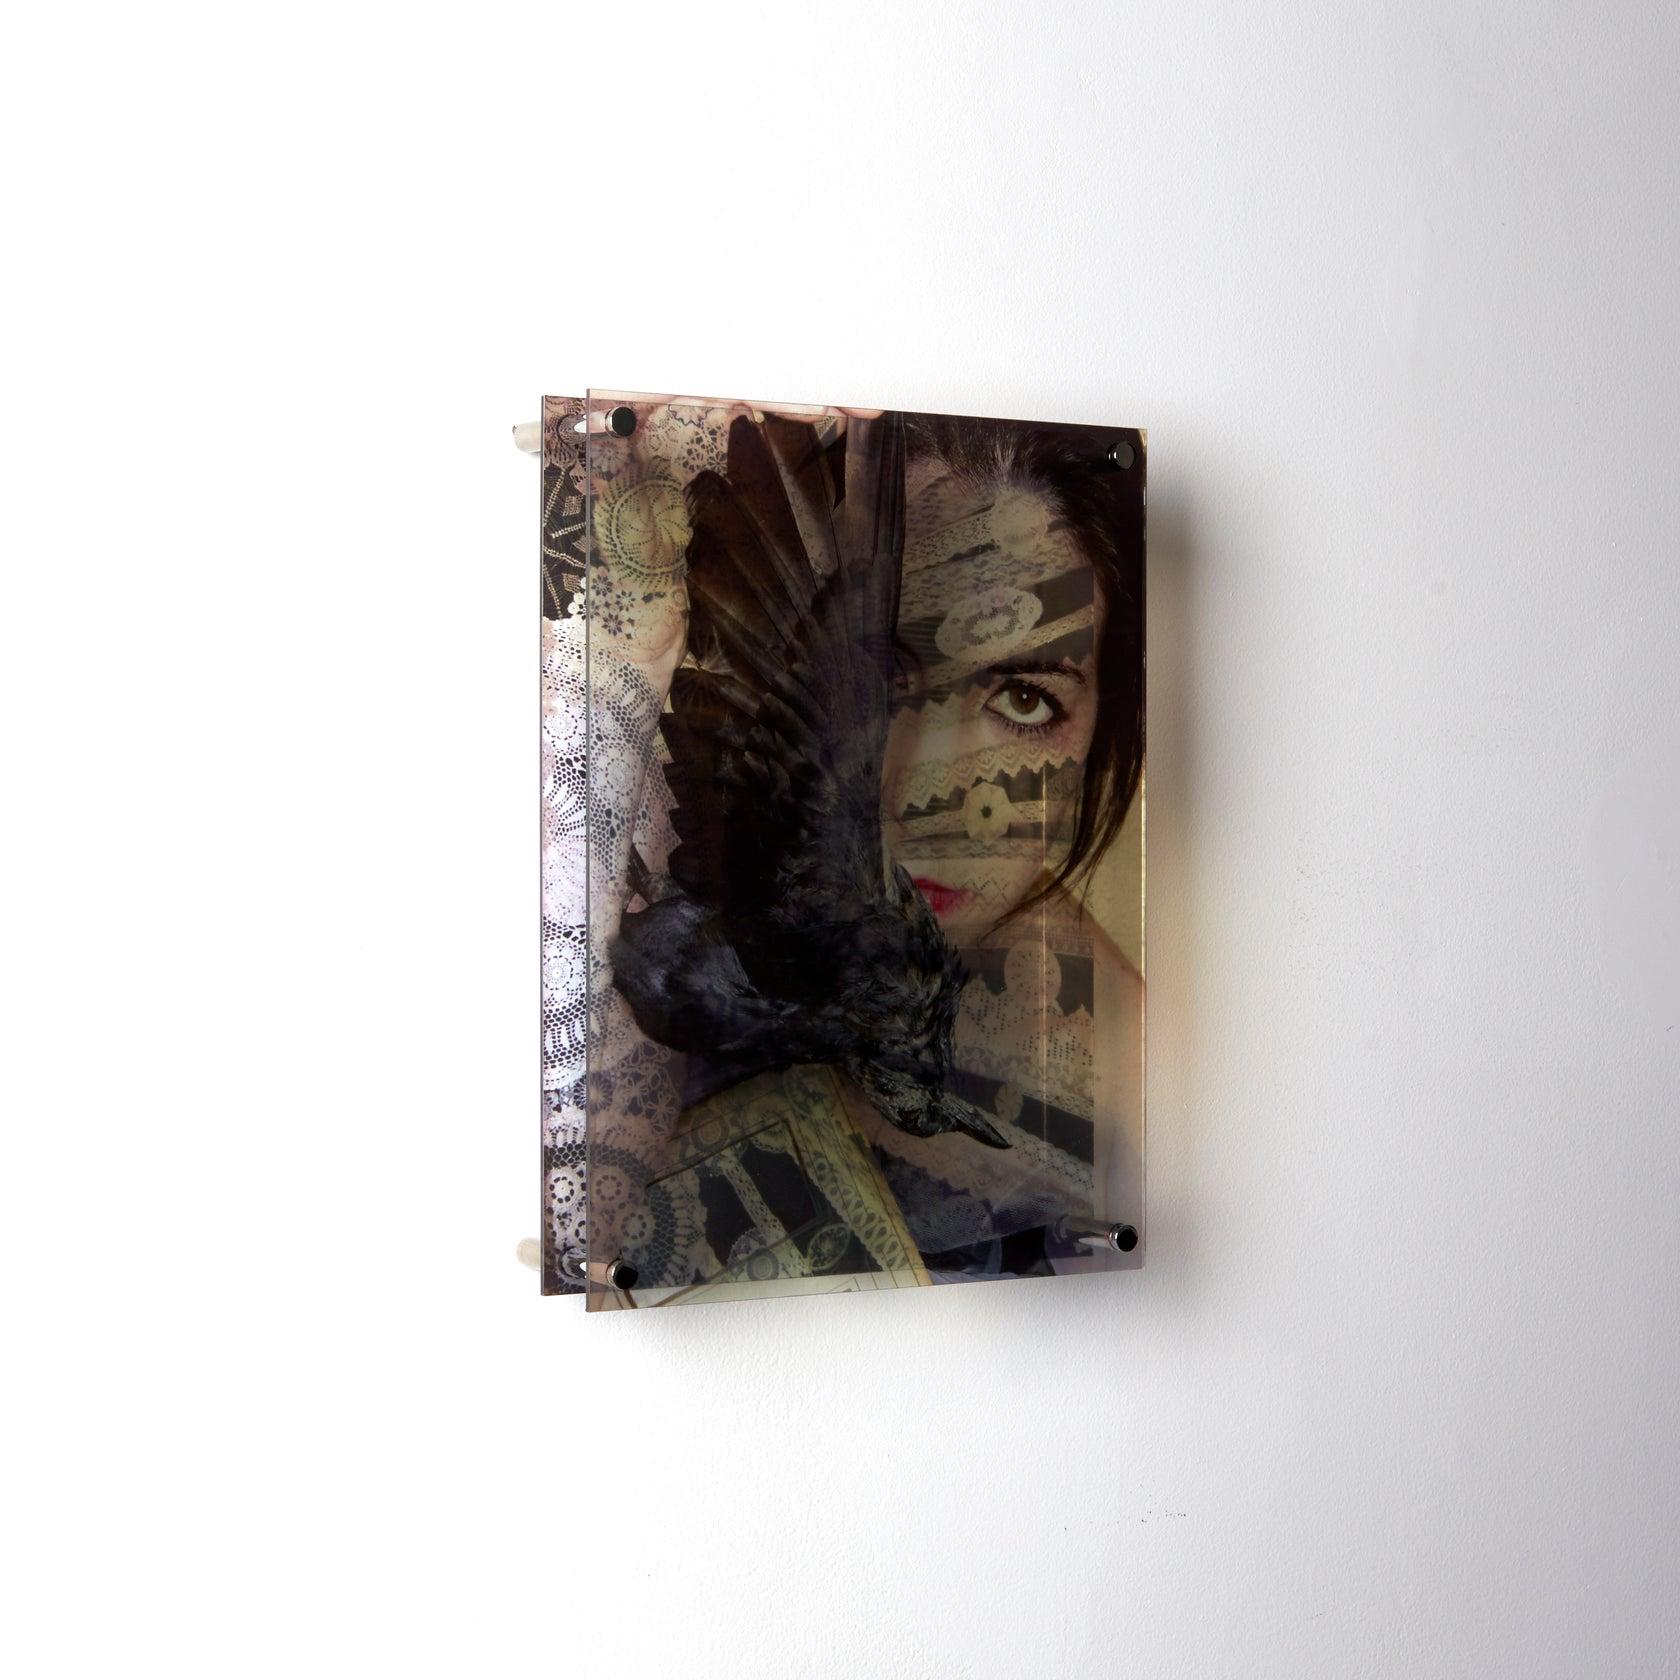 Artist: Eva Petric

Medium: Free standing of 2 photographs, C Print, on Duraflex foil mounted on Plexiglass, Edition of 30  

Dimensions: 16 x 12 in, 40.6 x 30.5 cm